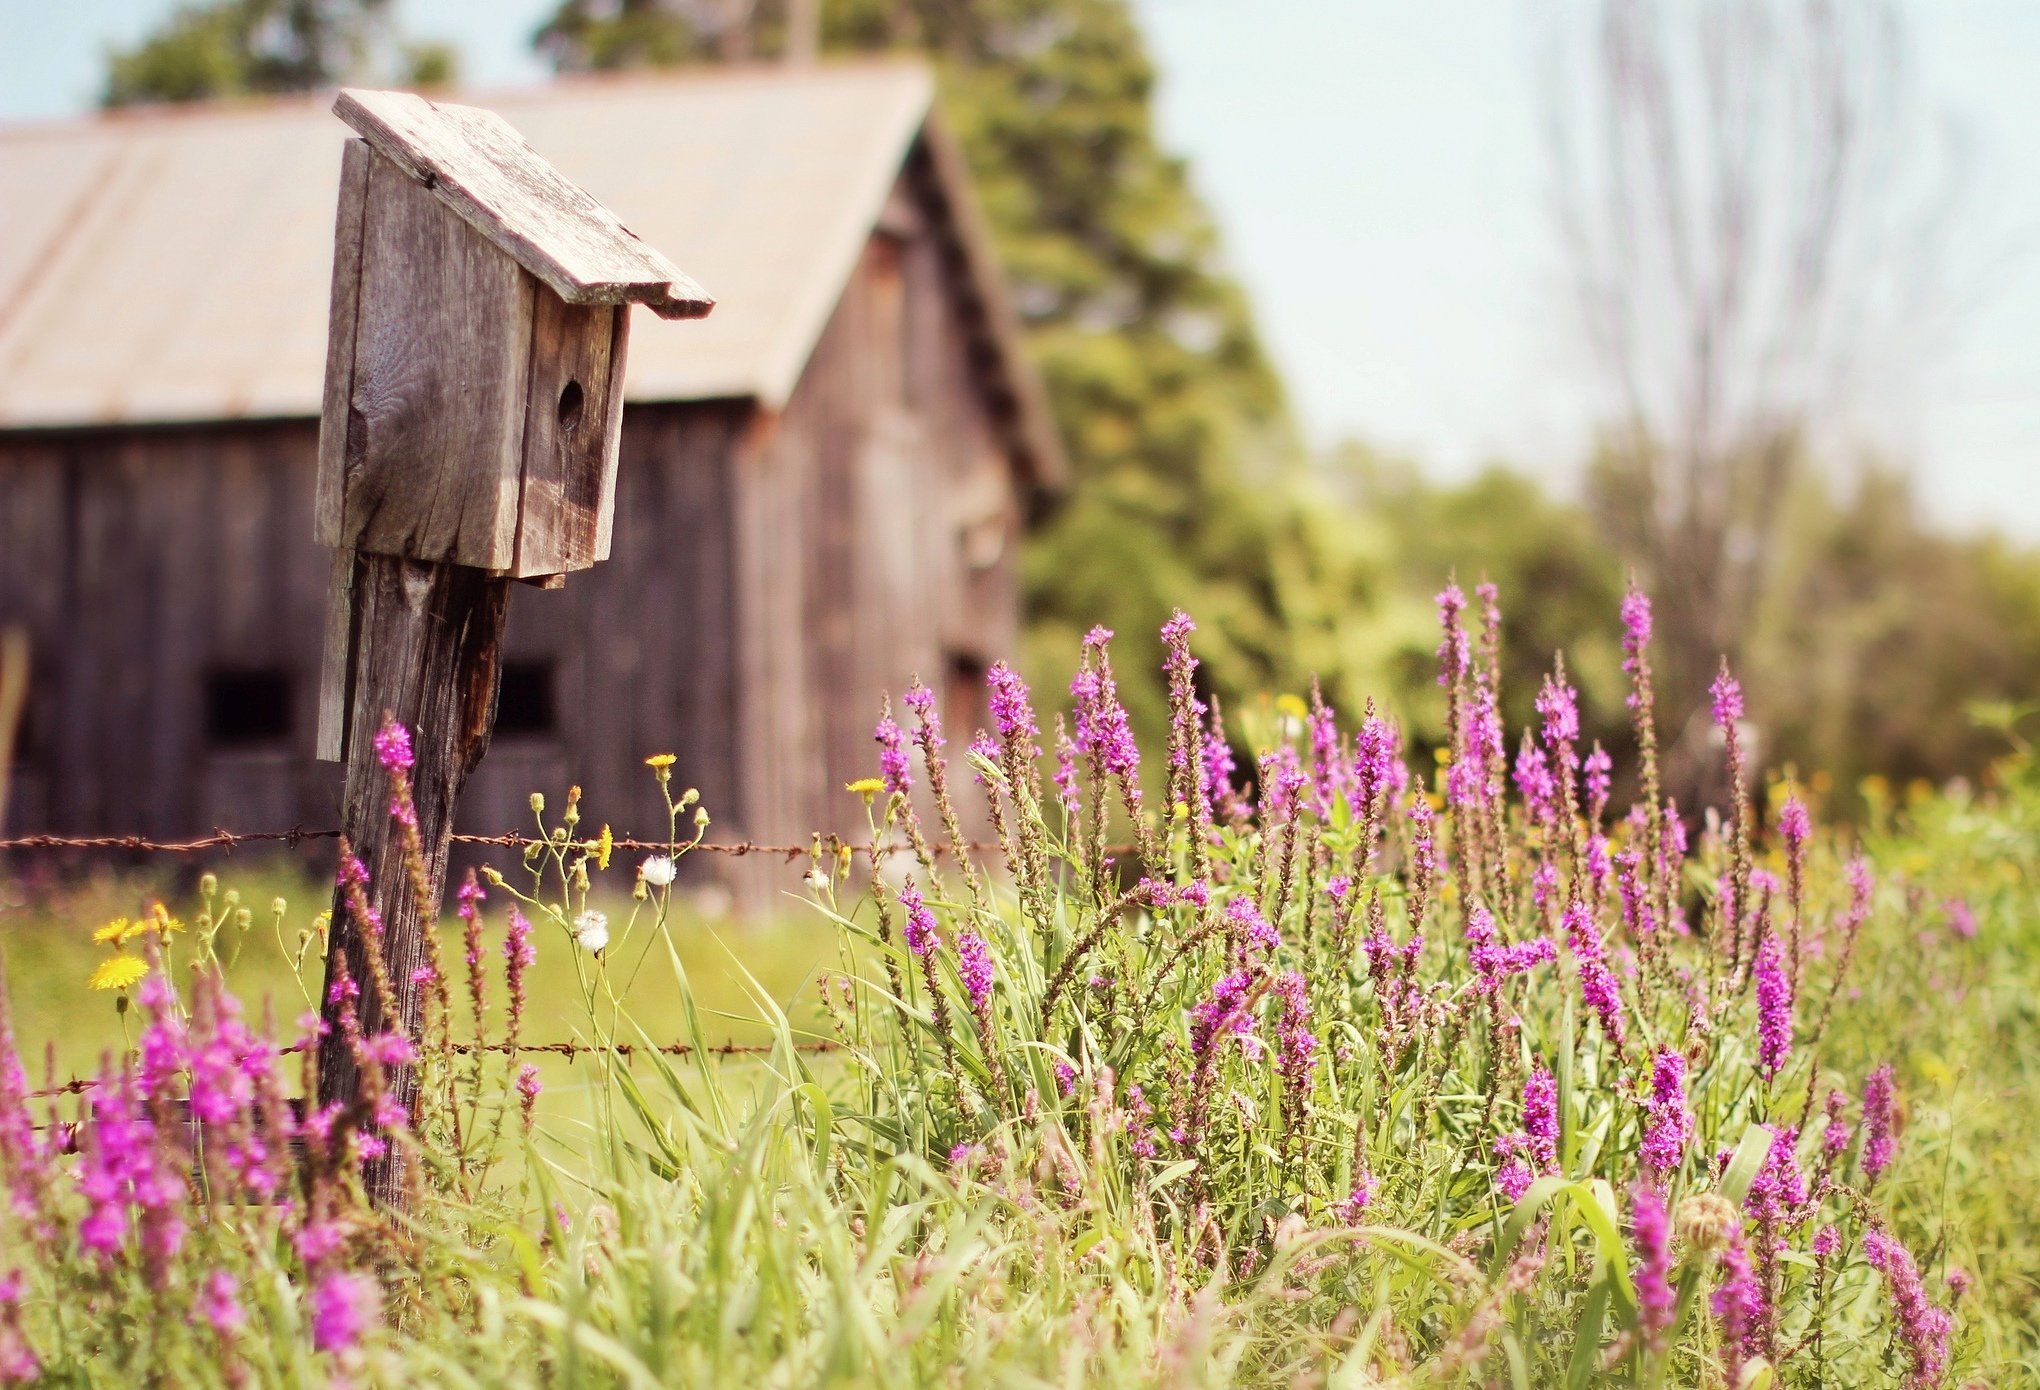 birdhouse, House, Cabin, Trees, Grass, Flowers, Field, Summer